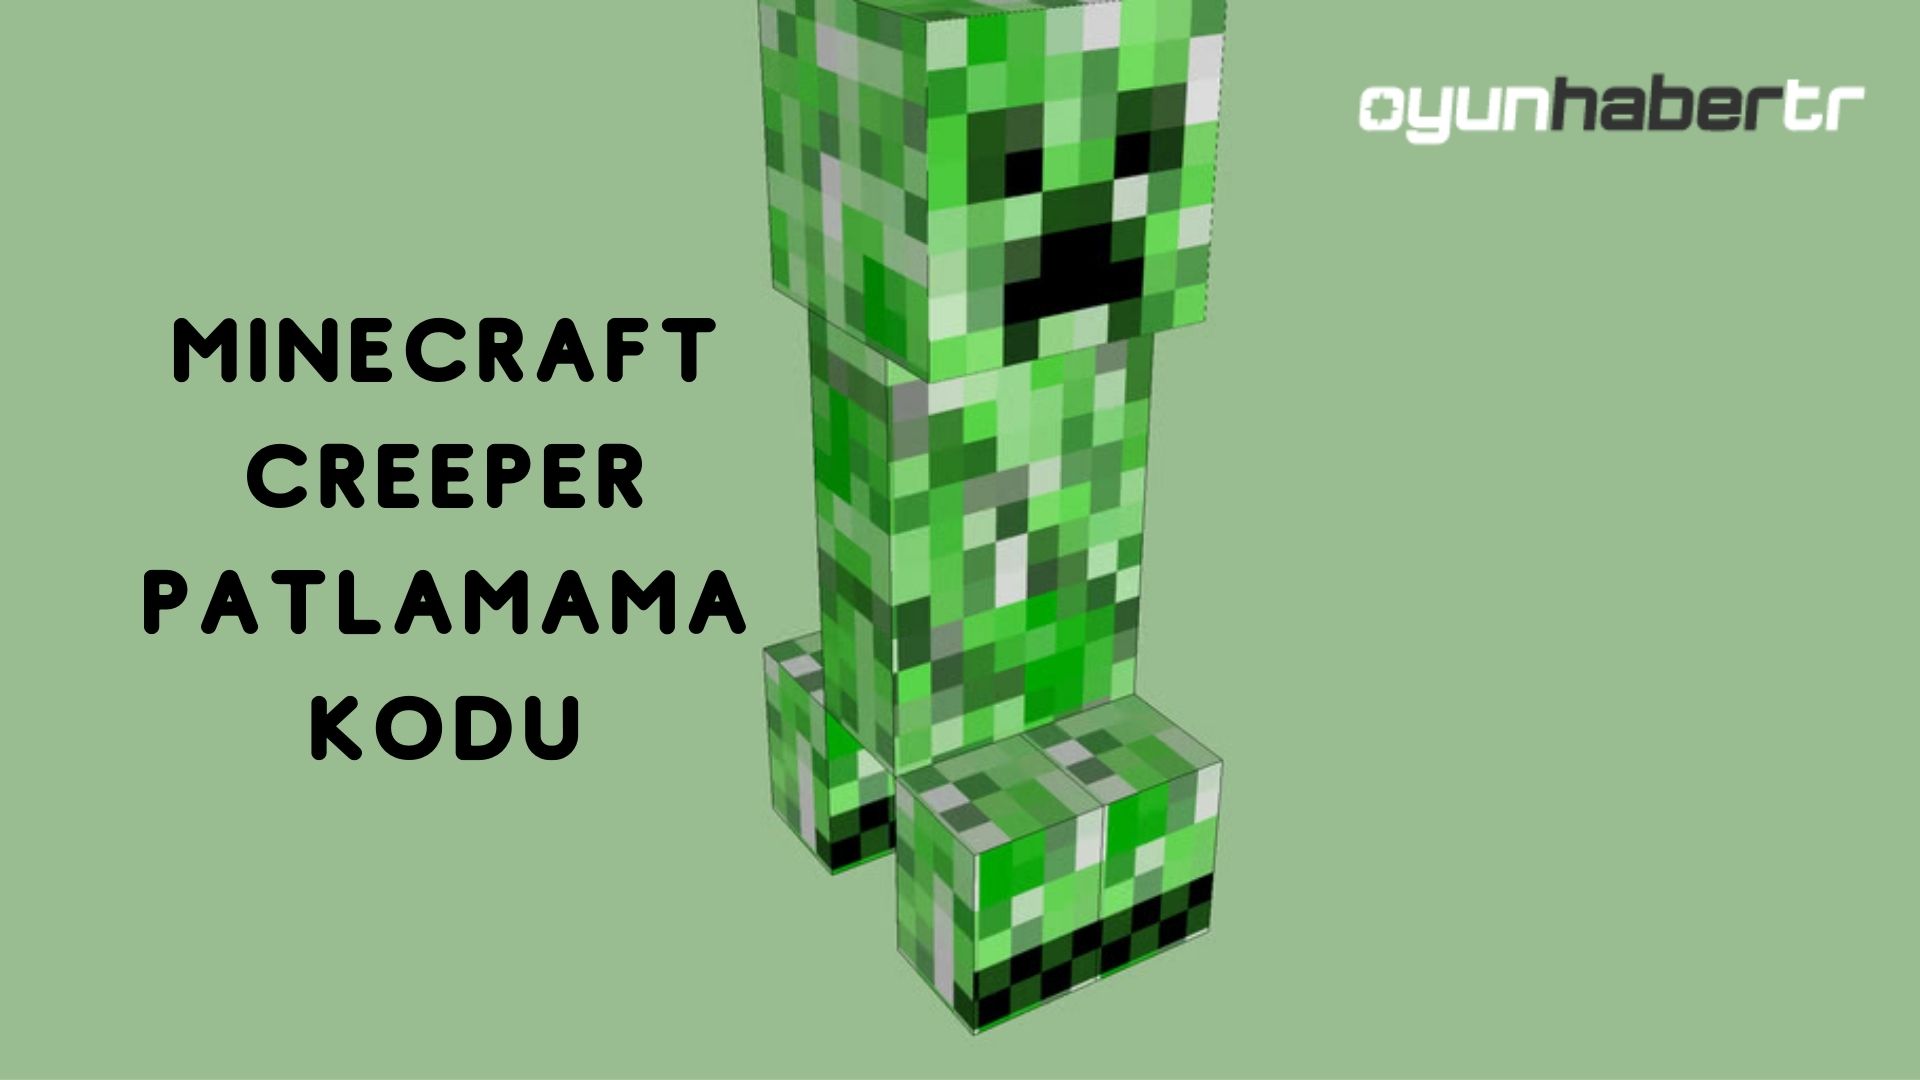 Minecraft Creeper Patlamama Kodu Nedir?